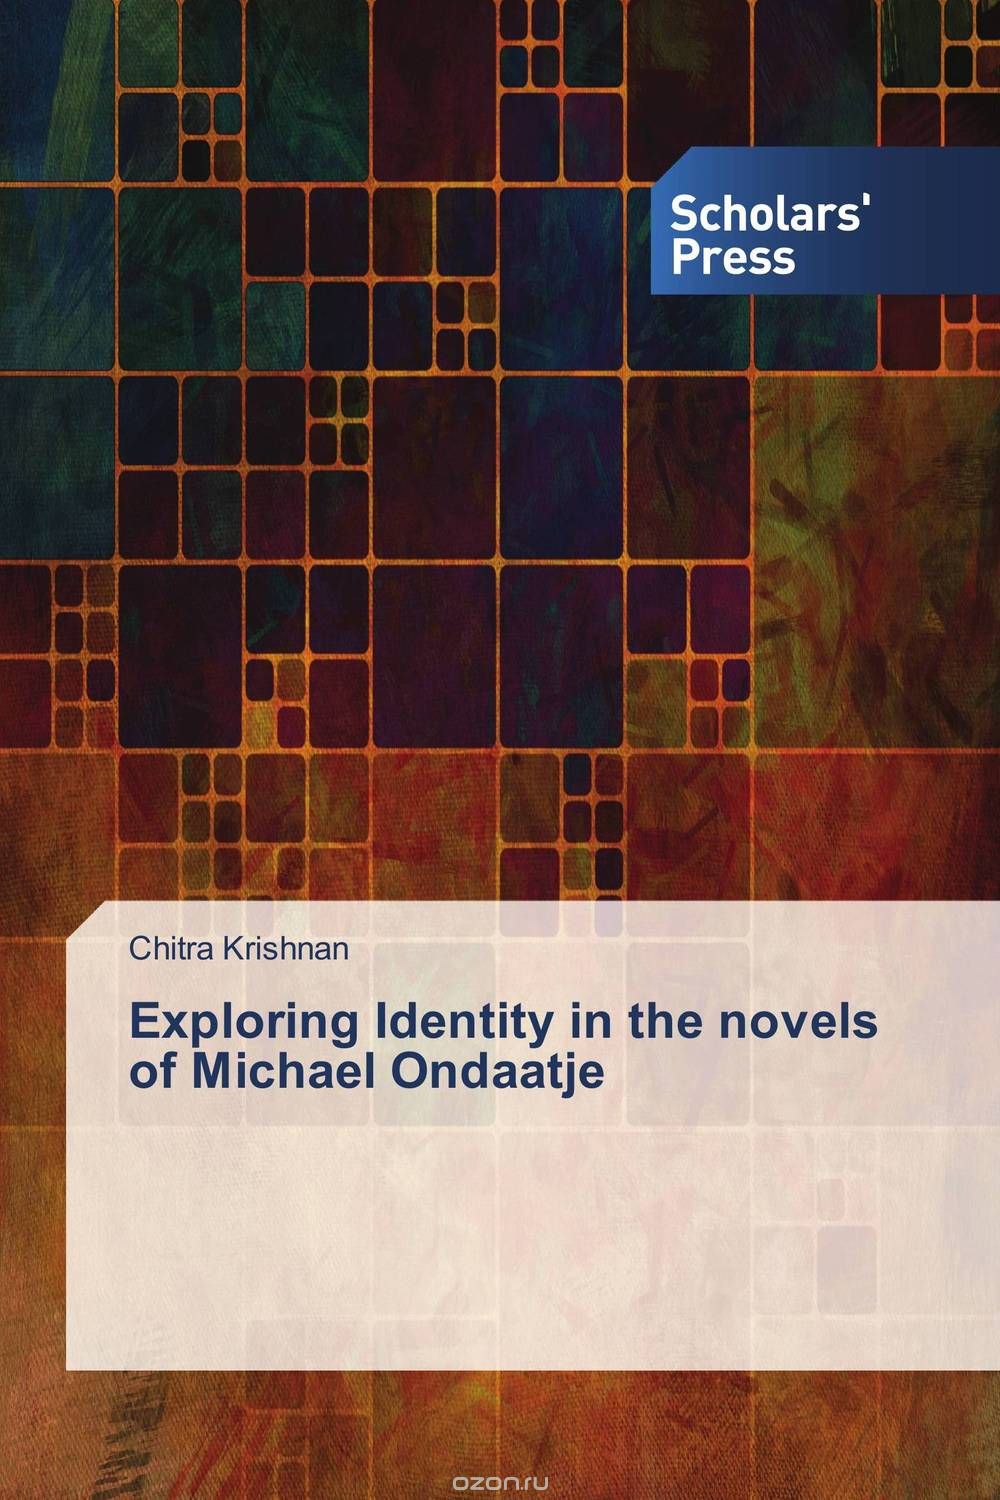 Скачать книгу "Exploring Identity in the novels of Michael Ondaatje"